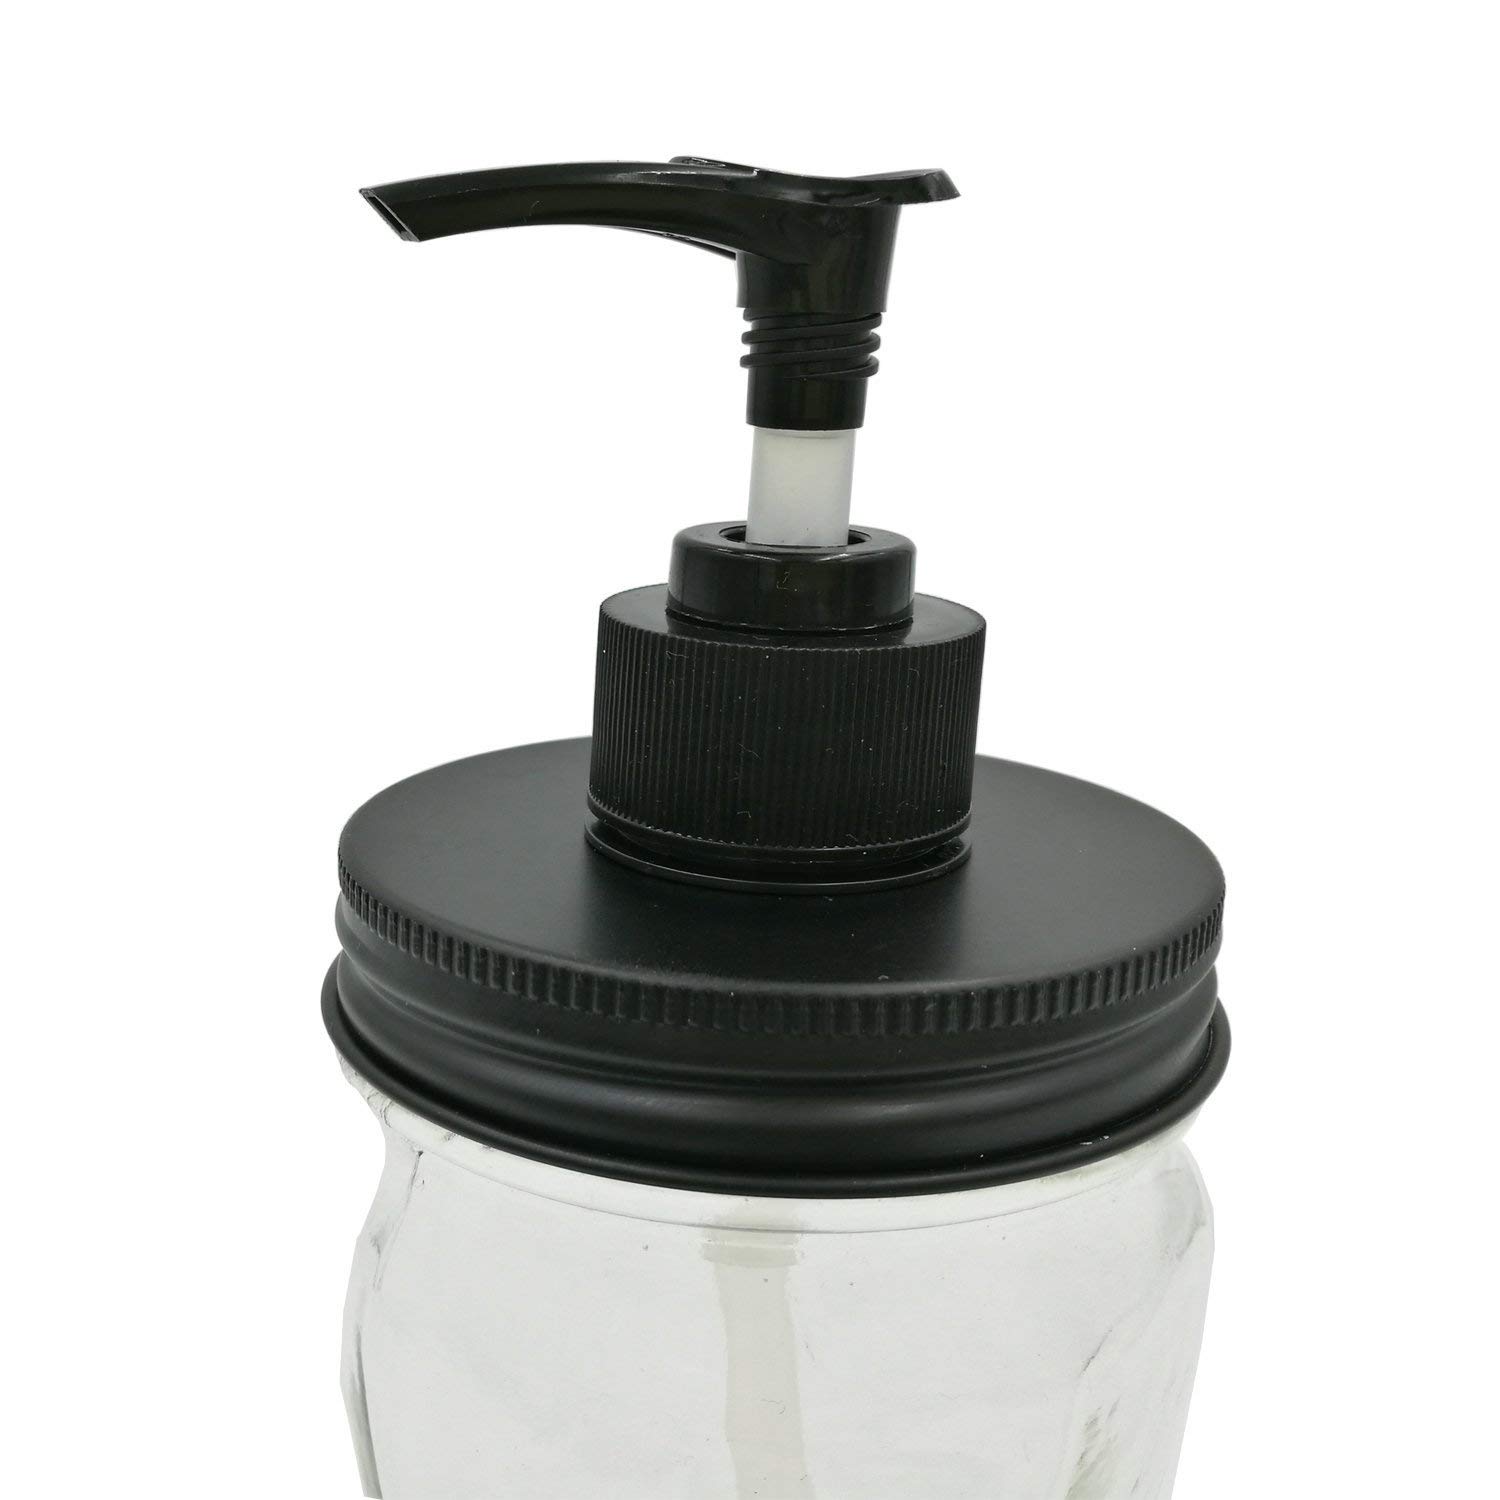 Rust resistant and leakage proof matt black soap dispenser pump lid for Mason jars